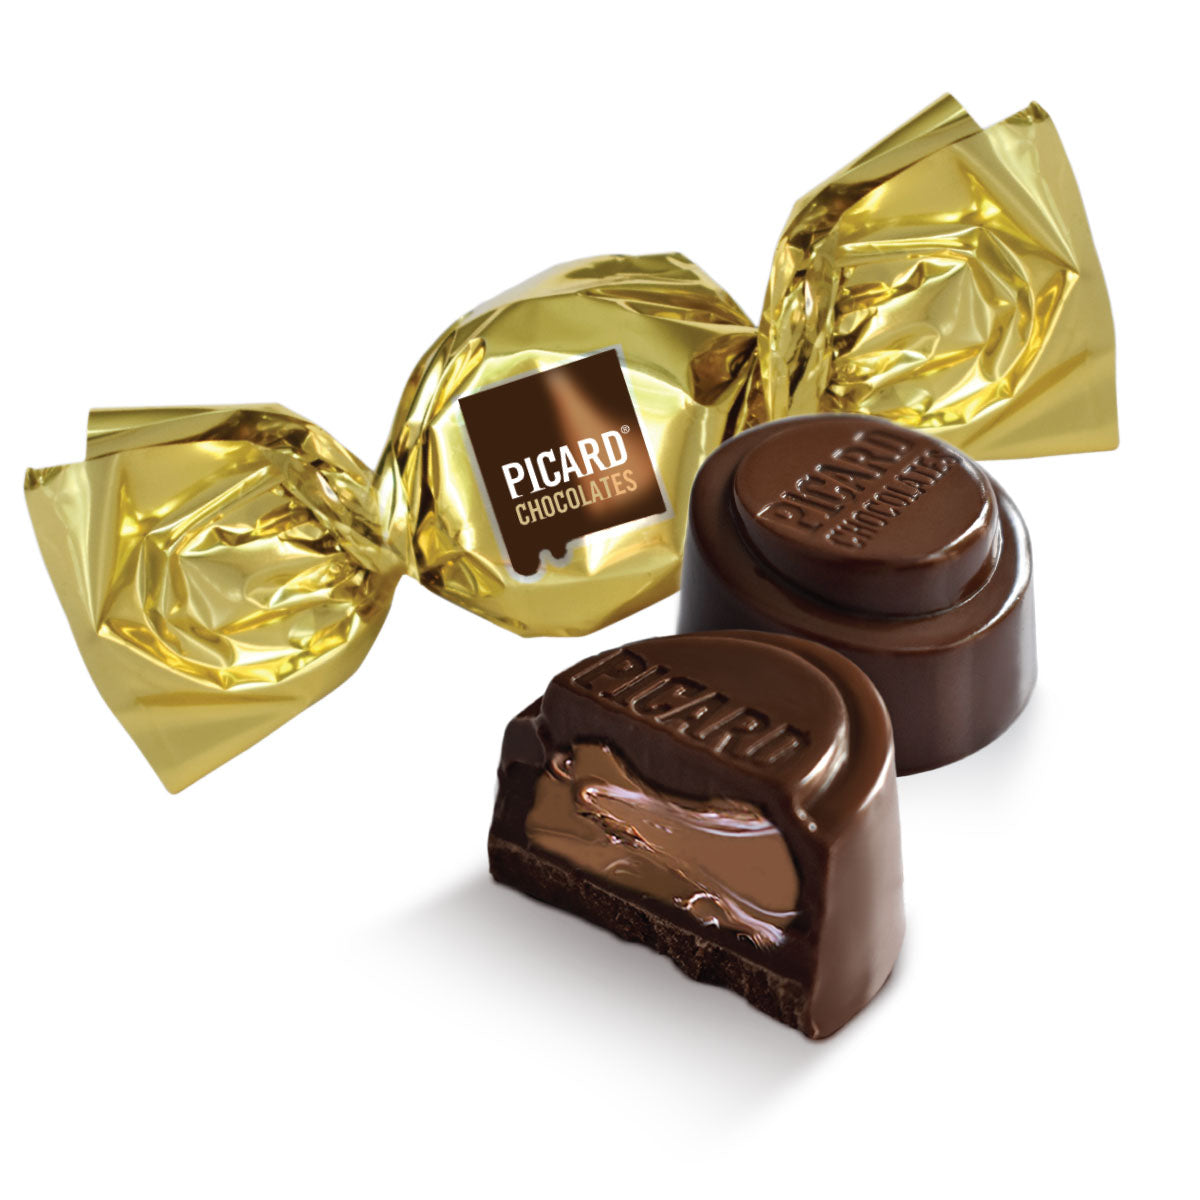 https://cdn.shopify.com/s/files/1/0487/8712/8477/products/Picard-Chocolates-relleno-suave-chocolate-obscuro-licor-crema-irlandesa-granel_1200x1200.jpg?v=1614620610